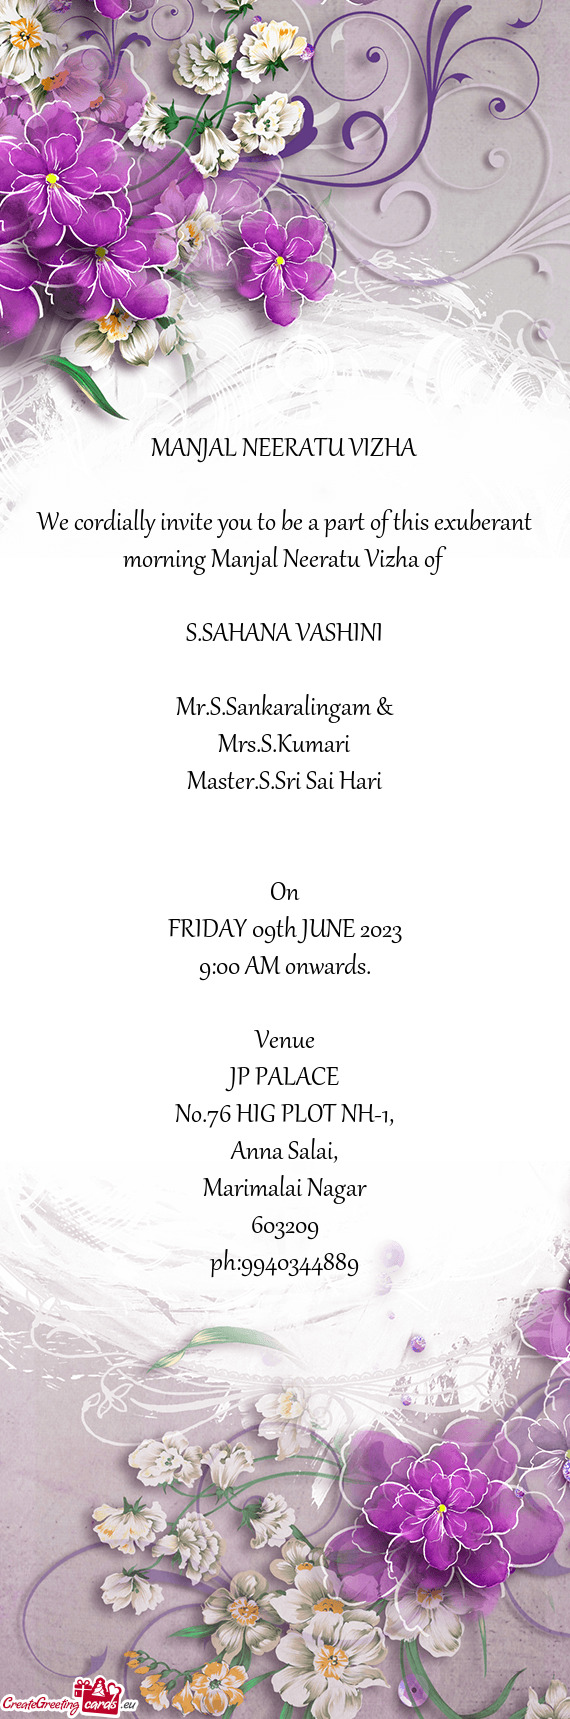 Mr.S.Sankaralingam &